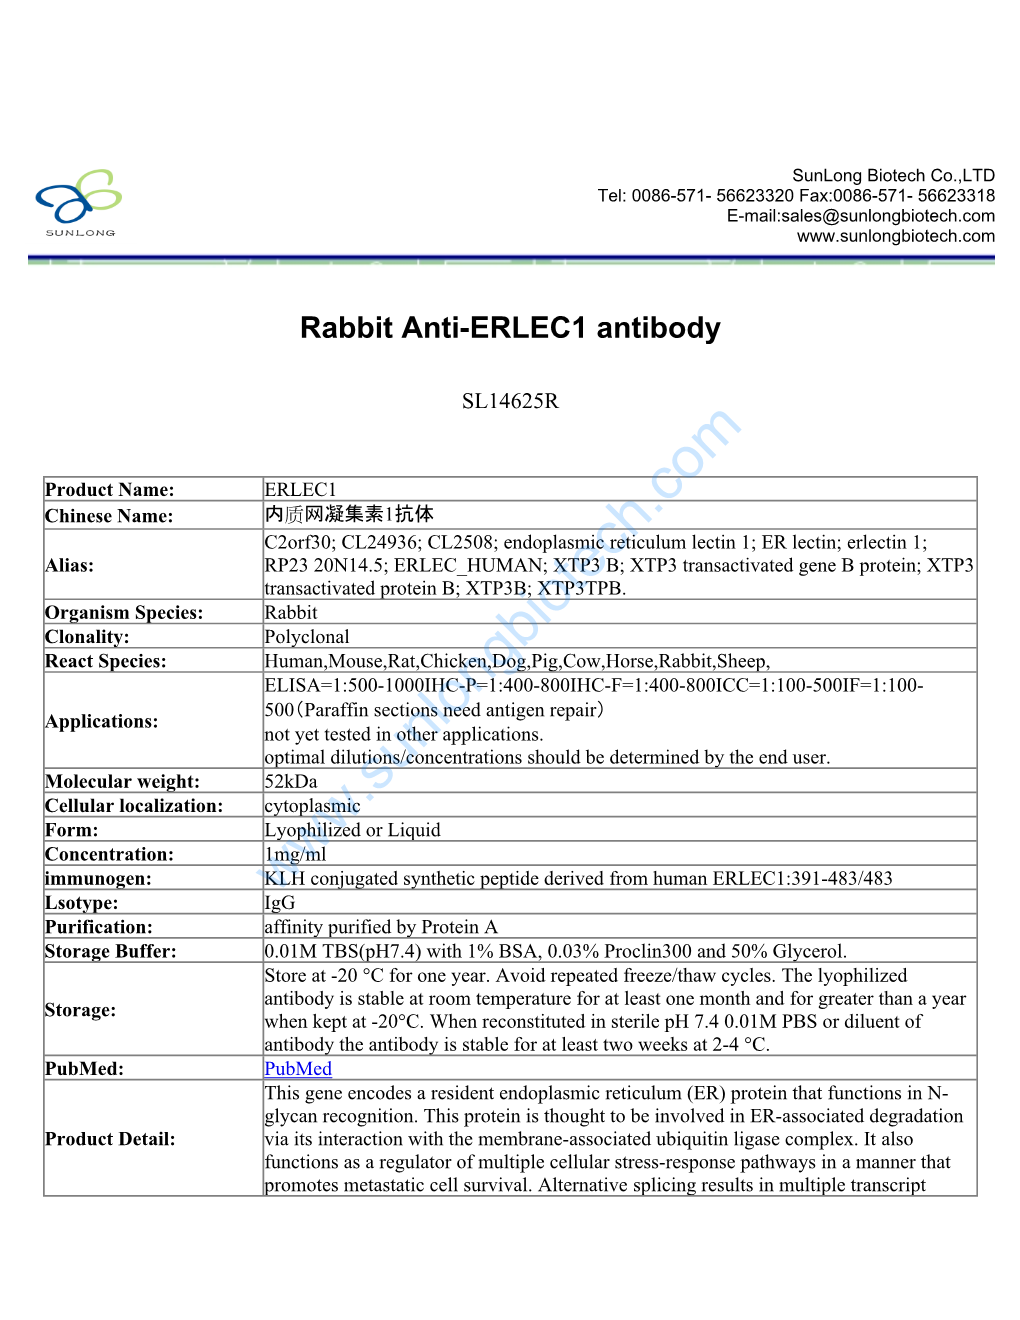 Rabbit Anti-ERLEC1 Antibody-SL14625R